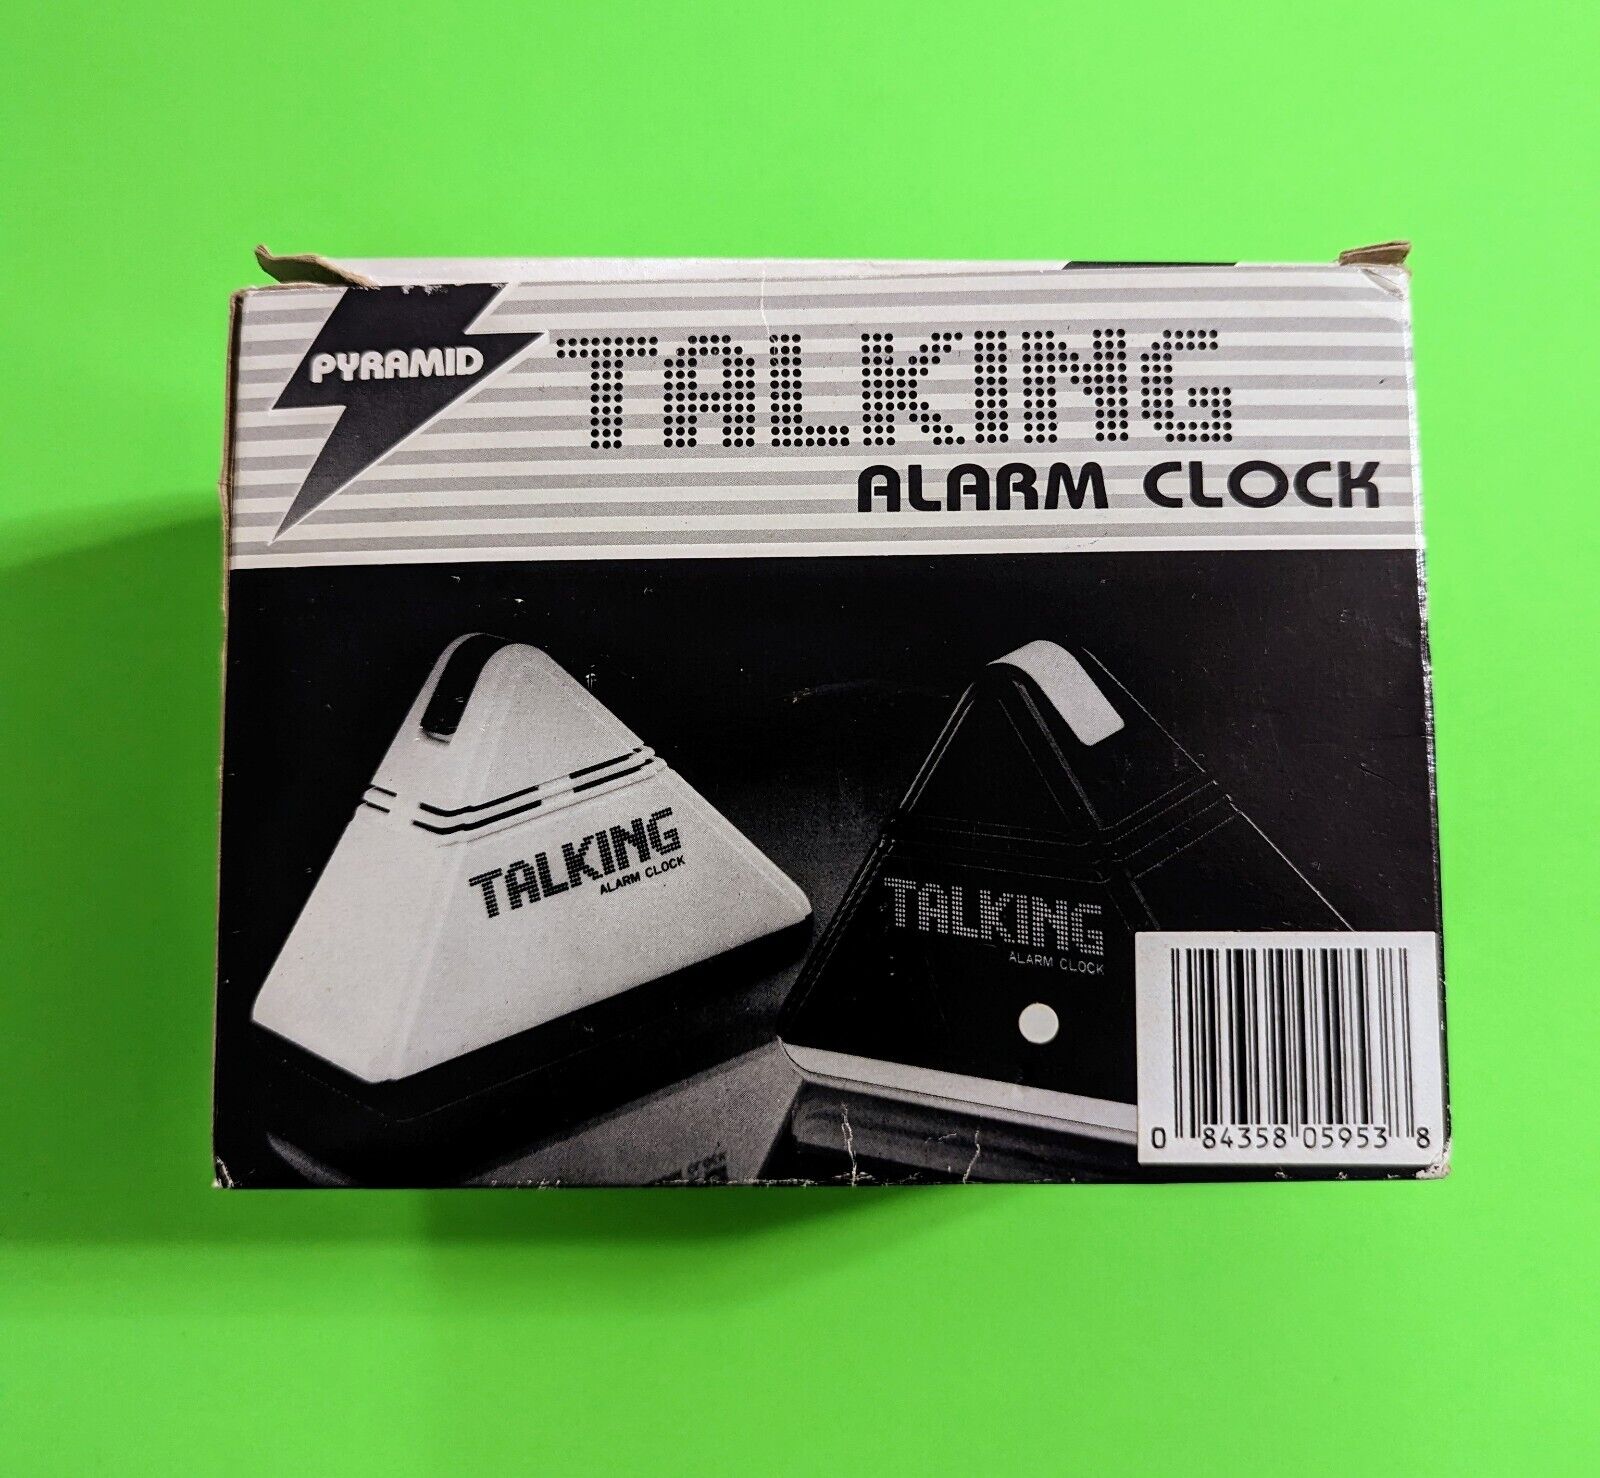 VTG Pyramid Talking Clock T-10 Orig Box Robot Voice Black White - Tested/Works